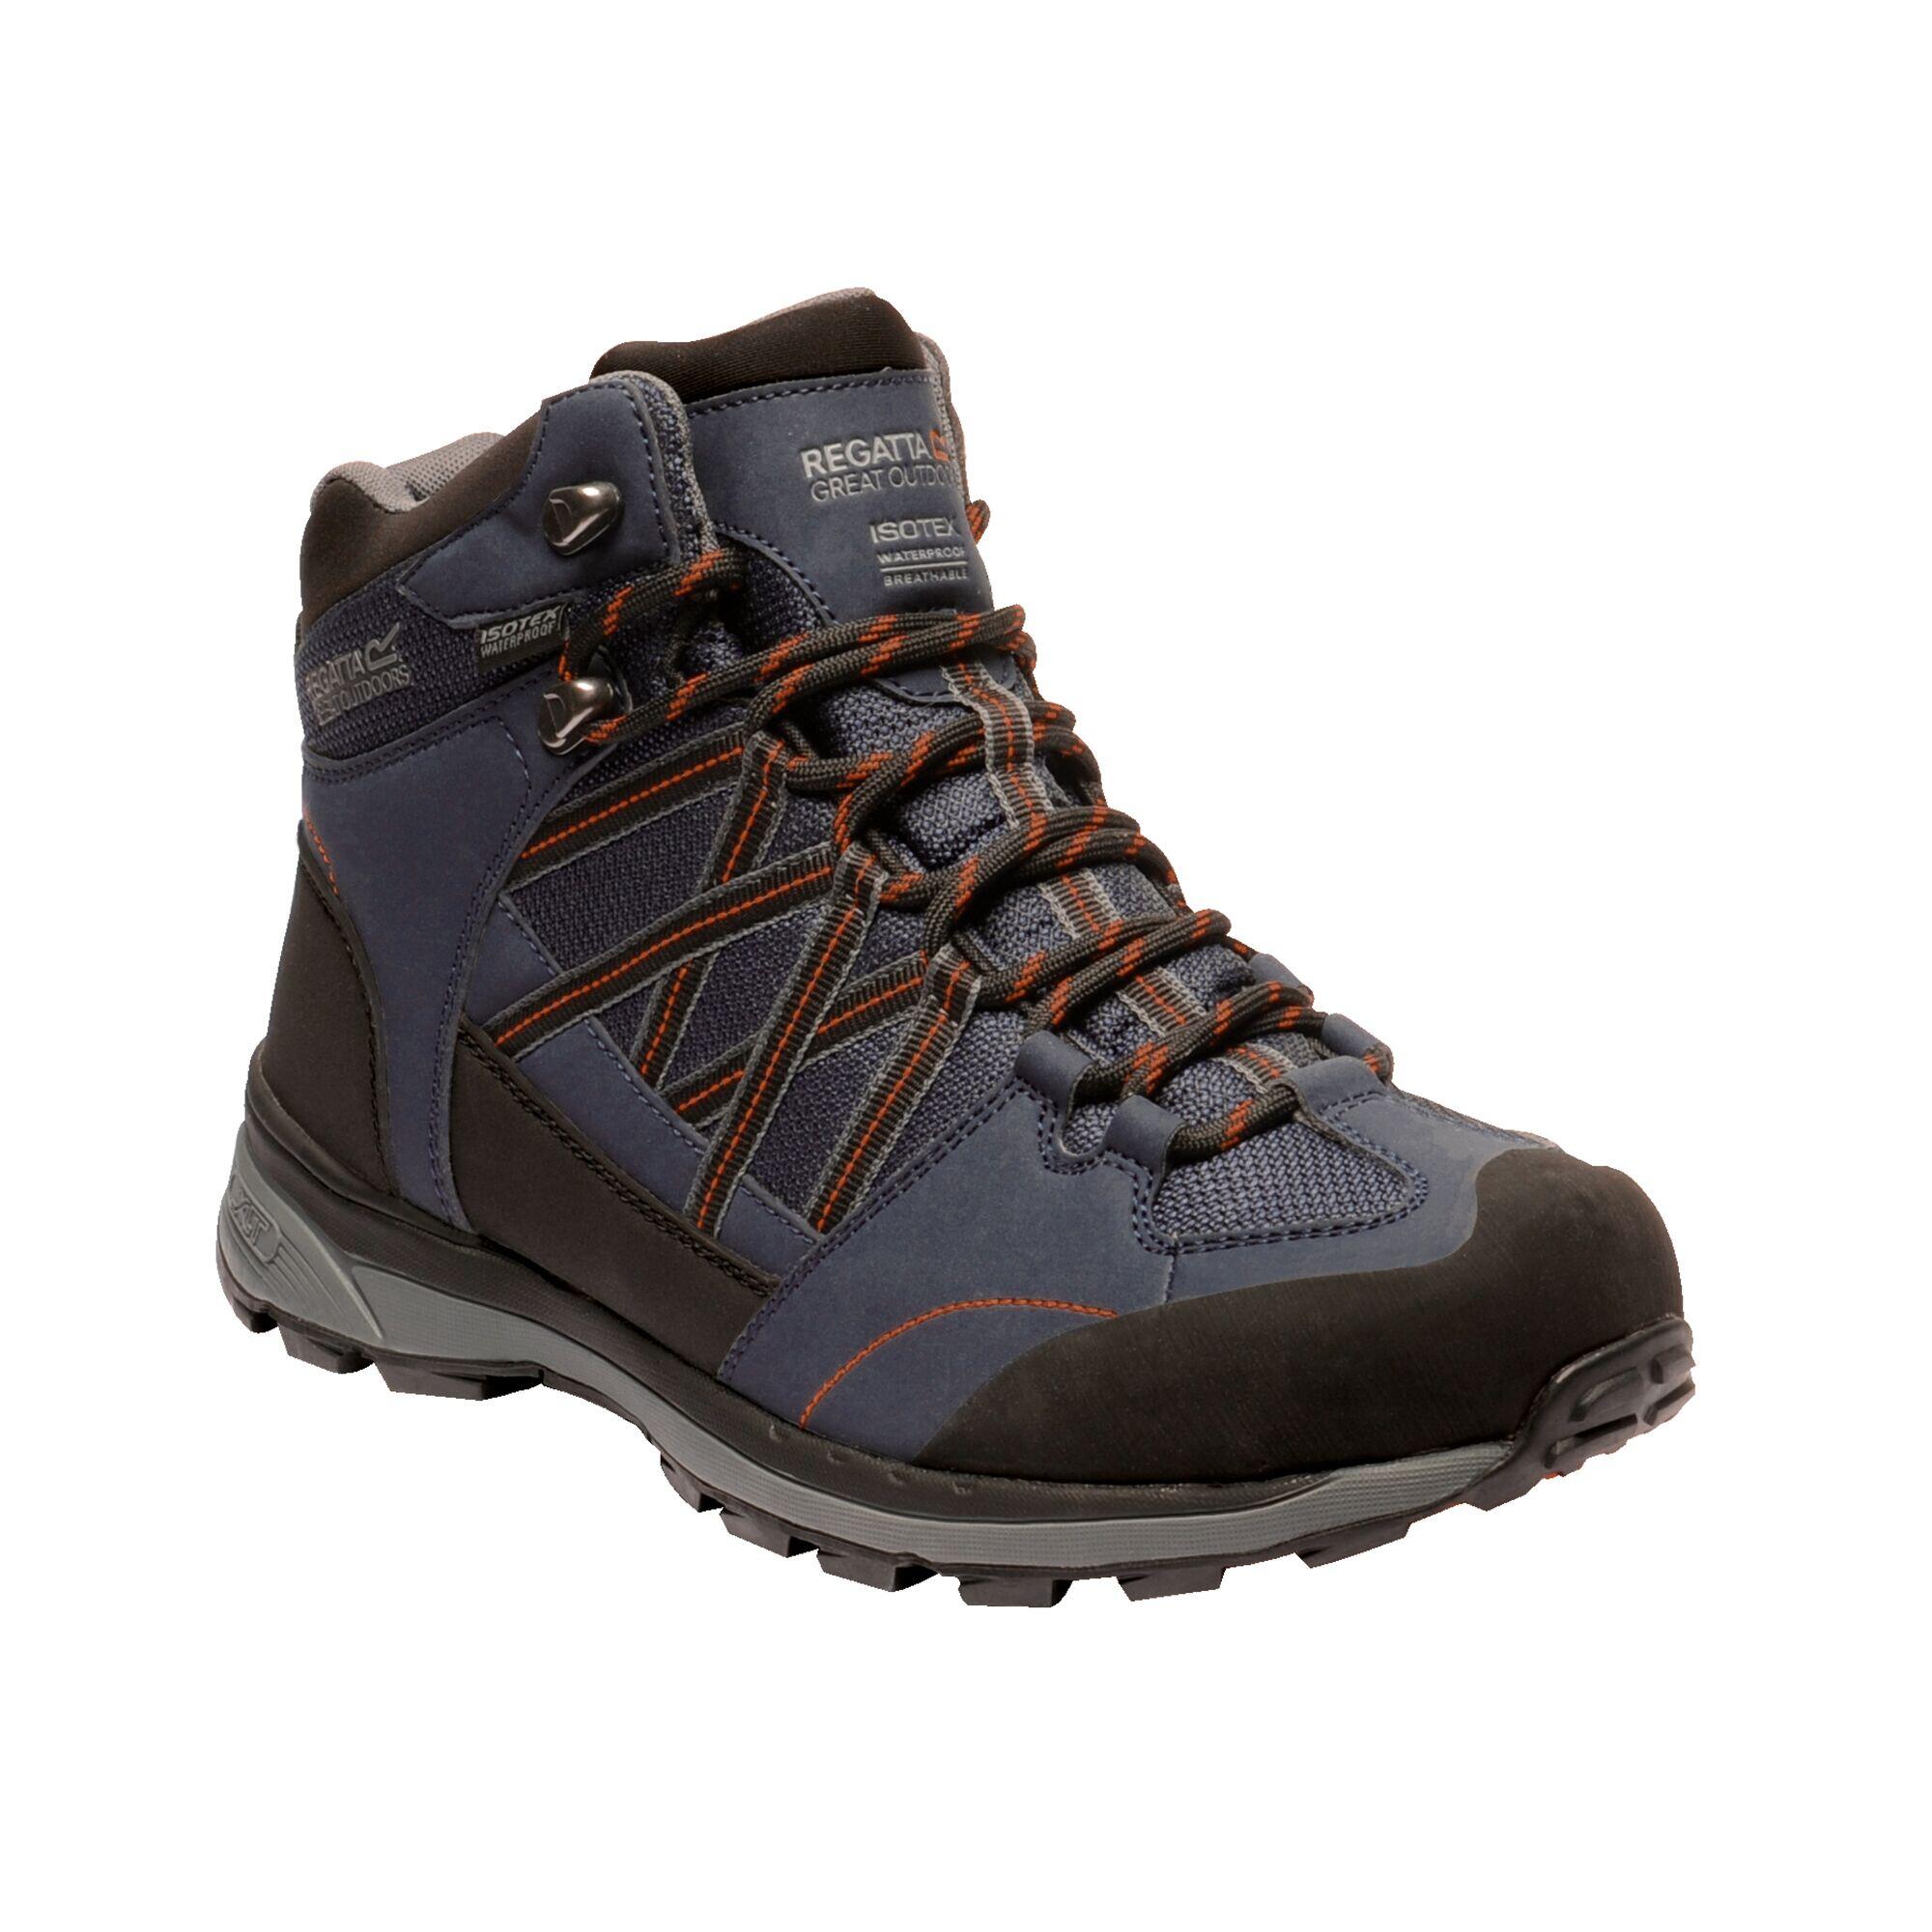 REGATTA Samaris II Men's Hiking Boots - Navy/Orange